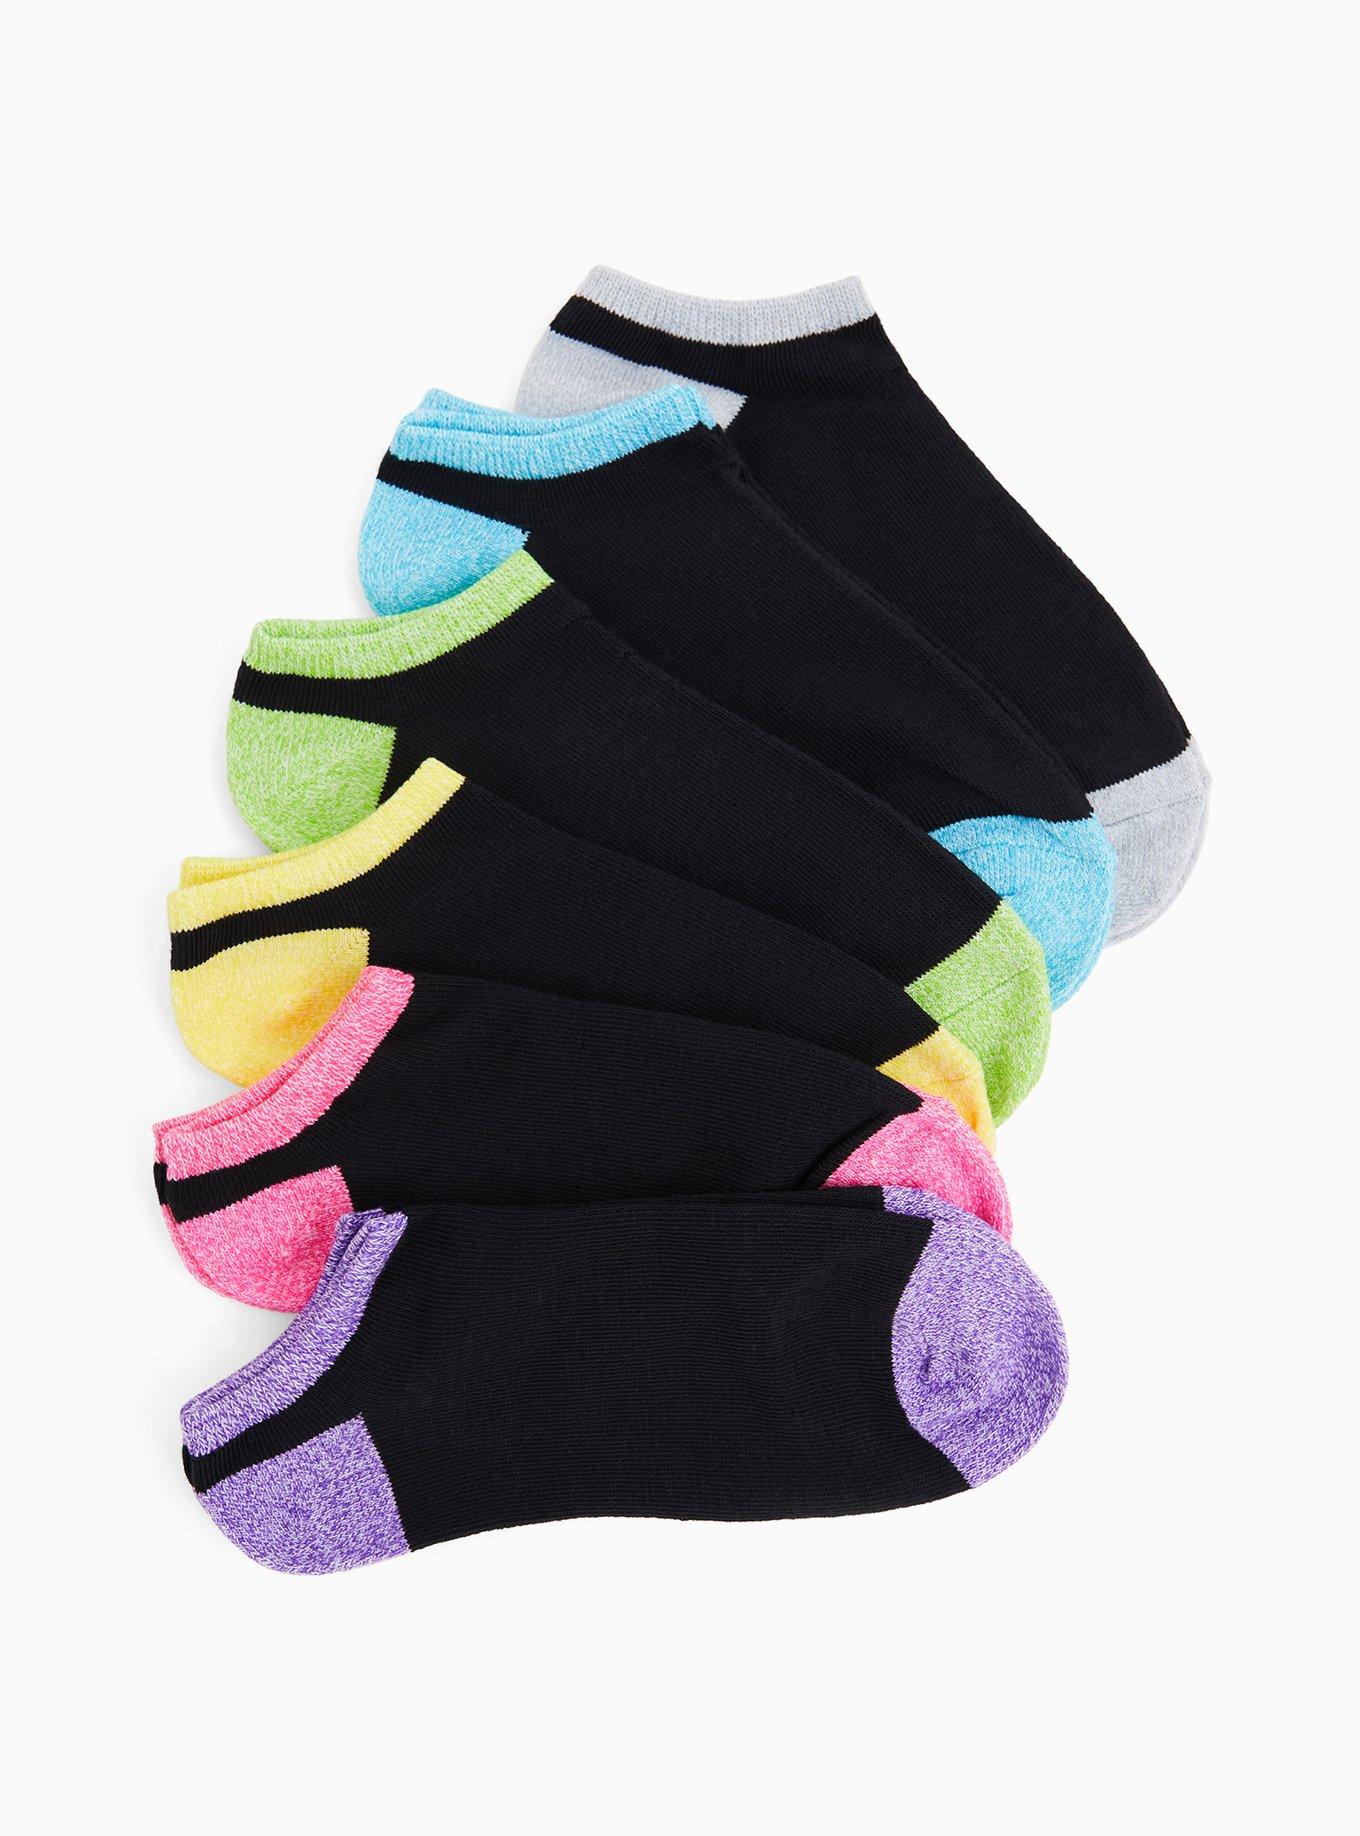 Plus Size - Black & Color Toe Ankle Socks Pack - Pack of 6 - Torrid